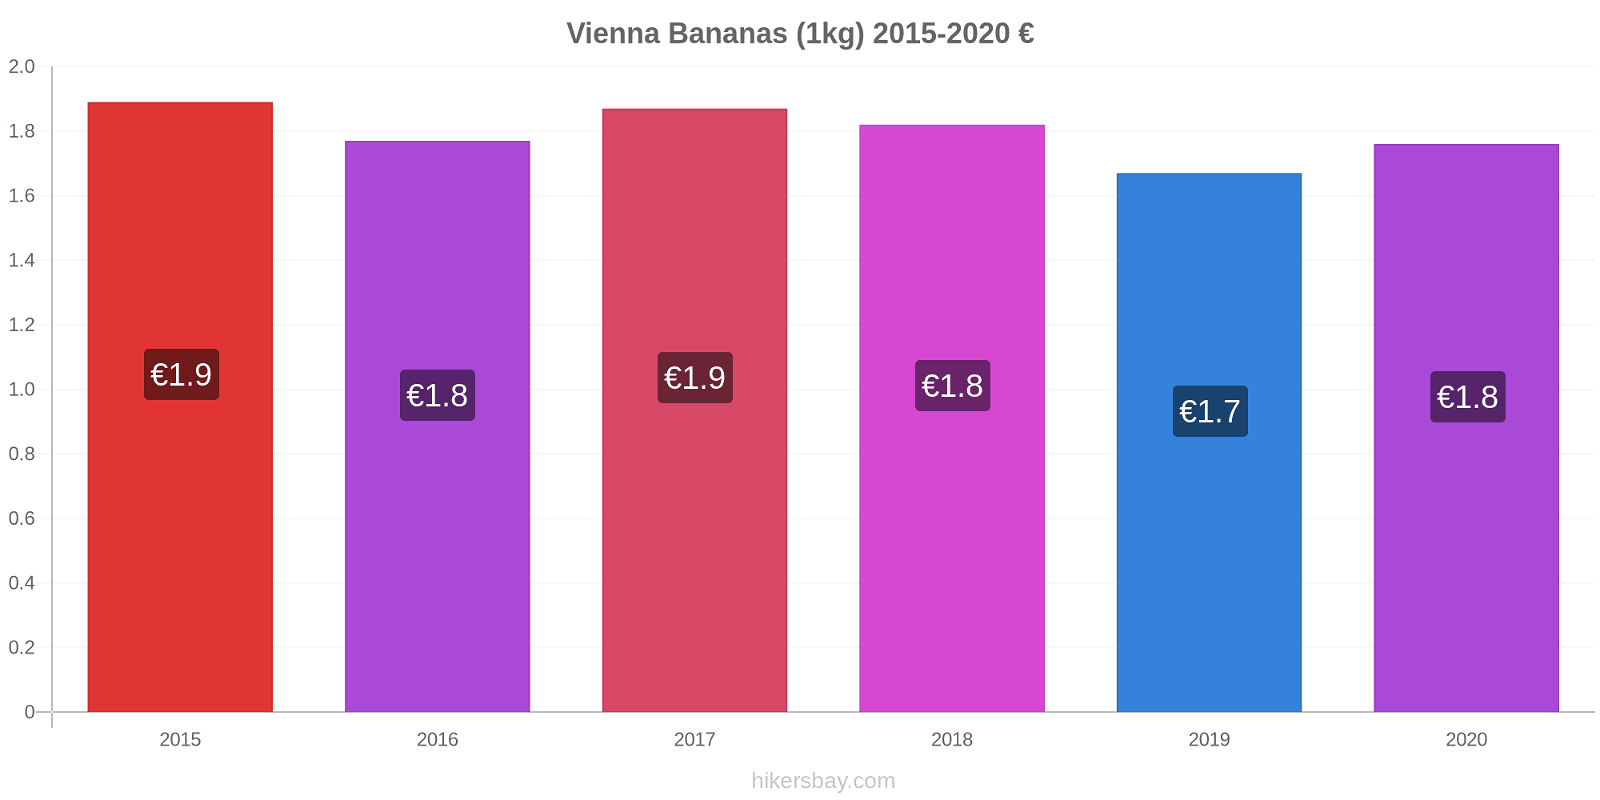 Vienna price changes Bananas (1kg) hikersbay.com